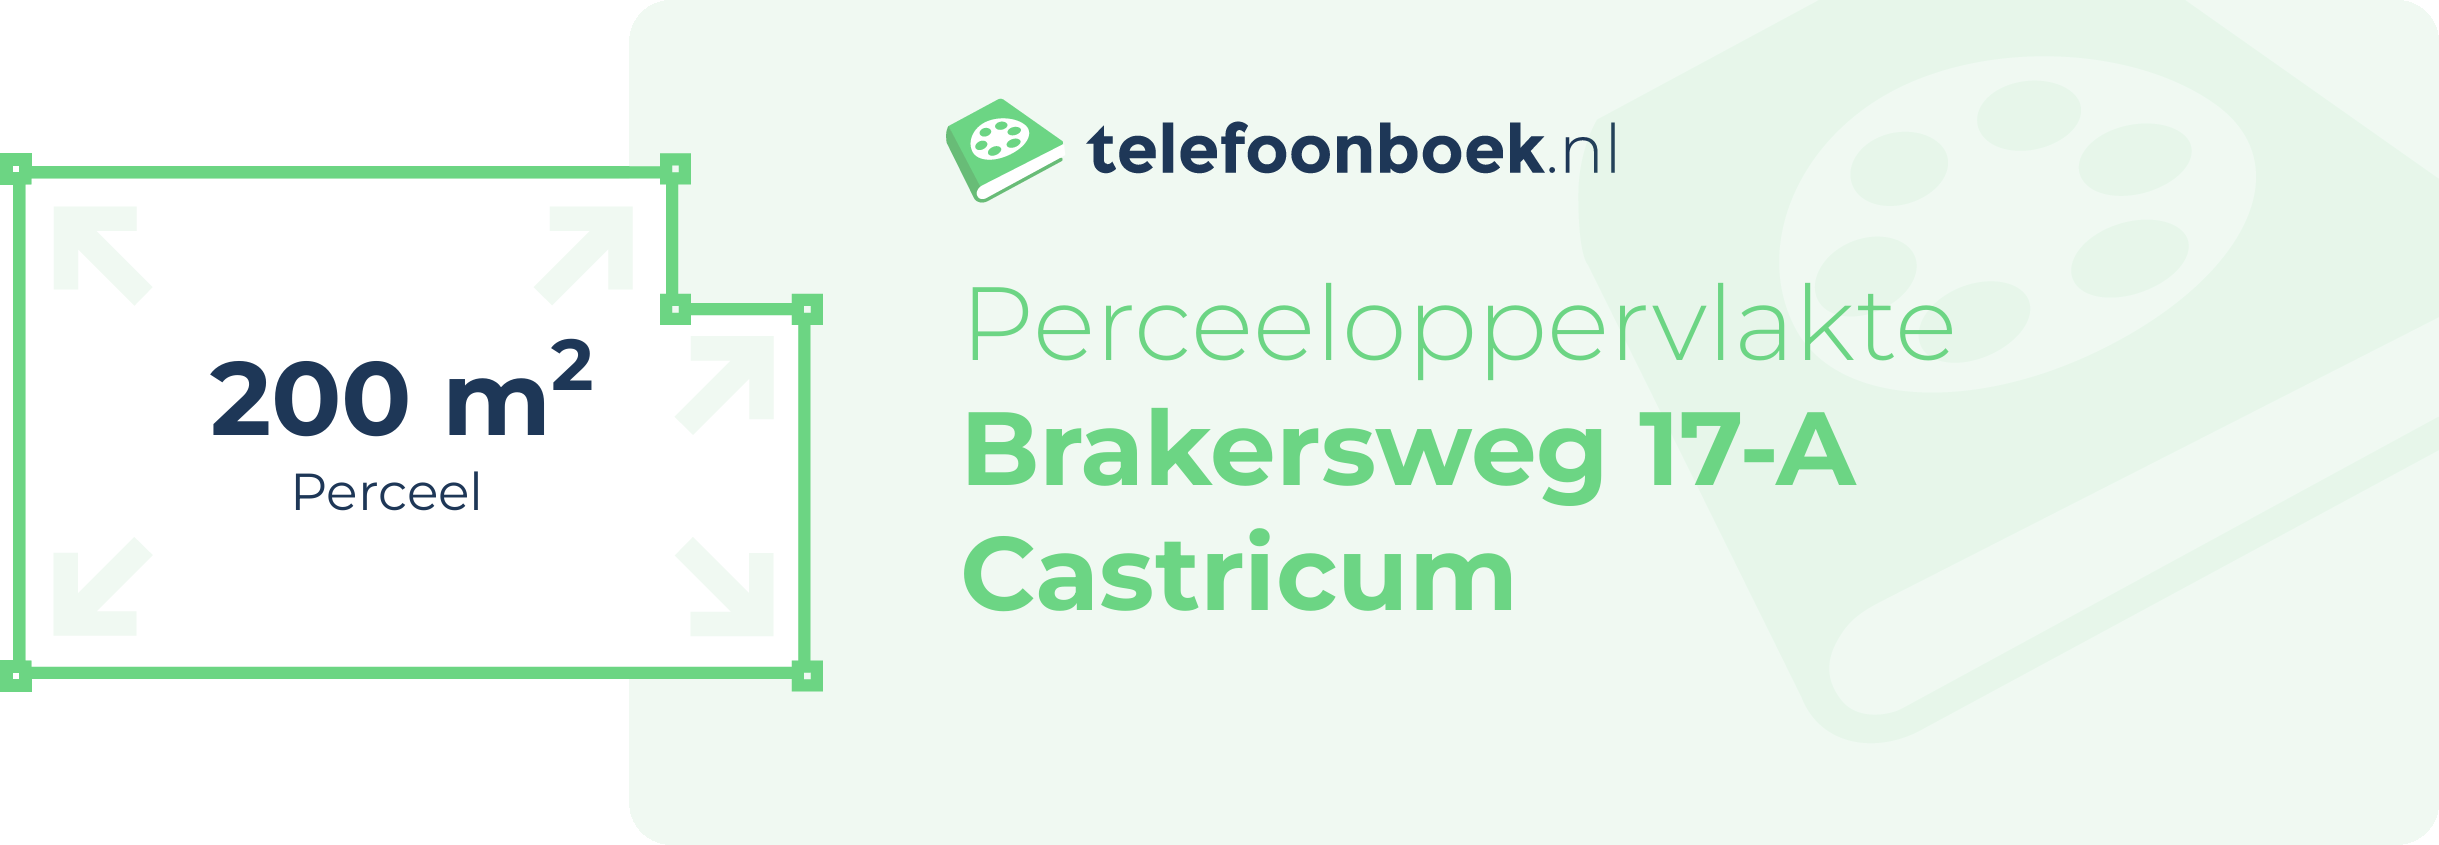 Perceeloppervlakte Brakersweg 17-A Castricum